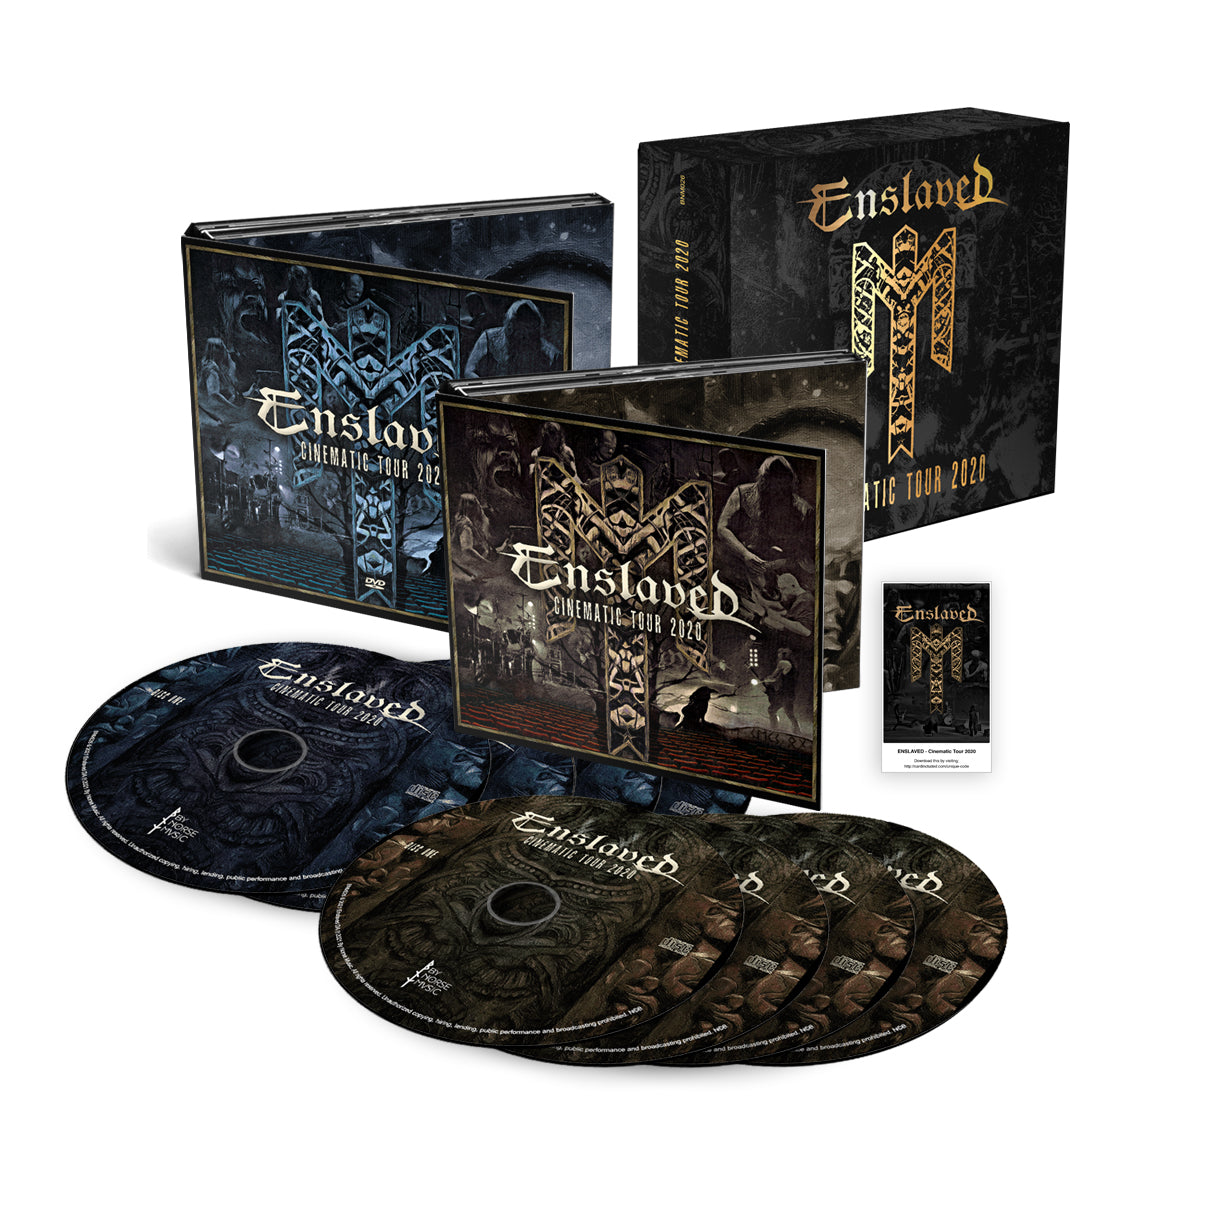 Enslaved - Cinematic Tour 2020 4xCD/4xDVD (PAL) Boxset